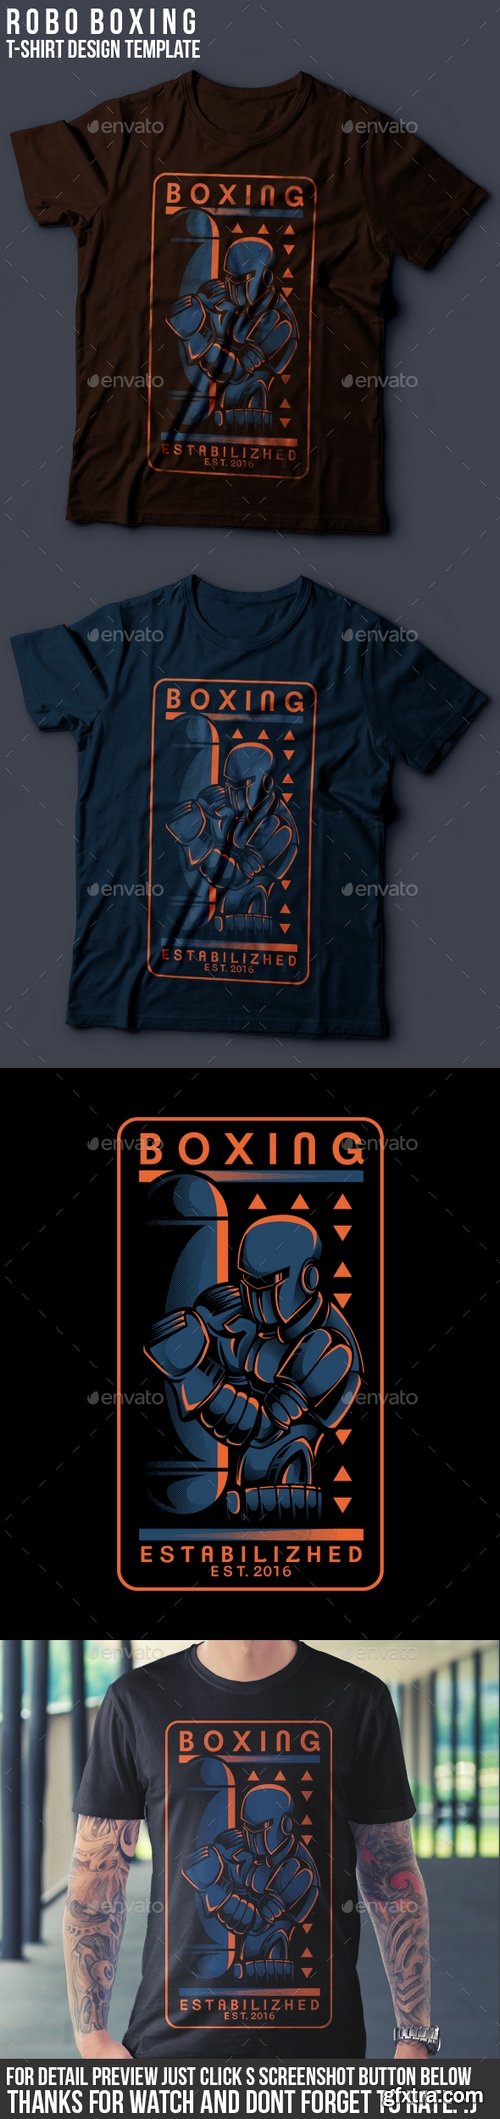 Graphicriver - Robo Boxing T-Shirt Design 18532012